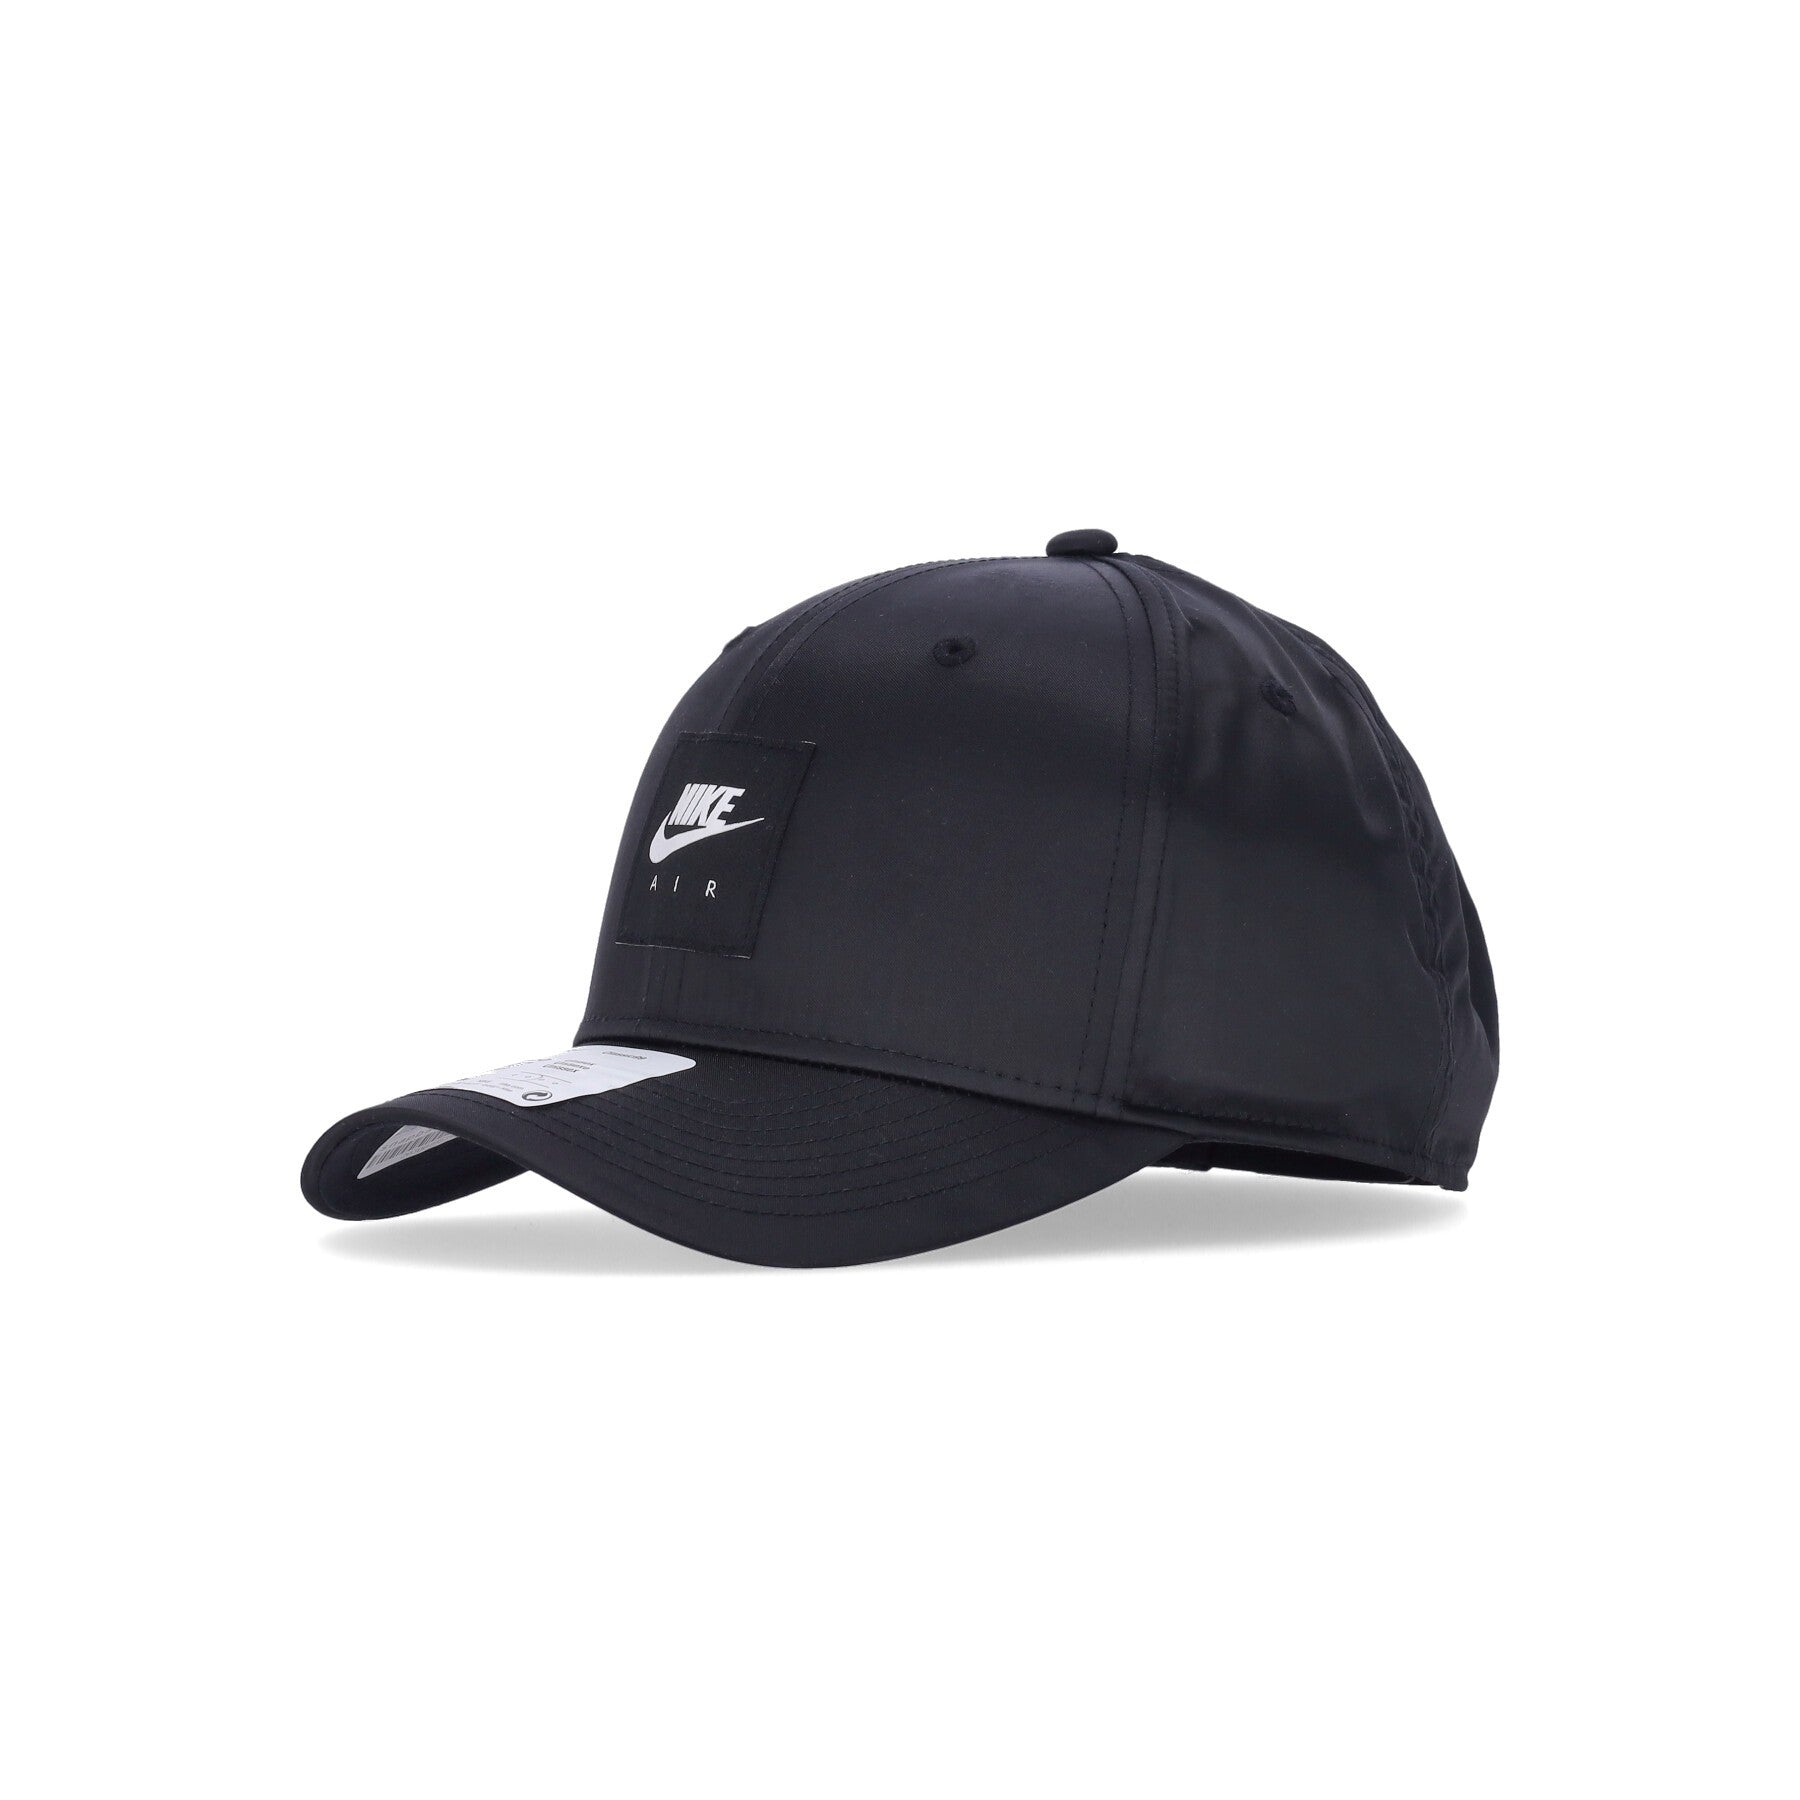 Curved Visor Cap for Men Sportswear Air Classic99 Cap Black